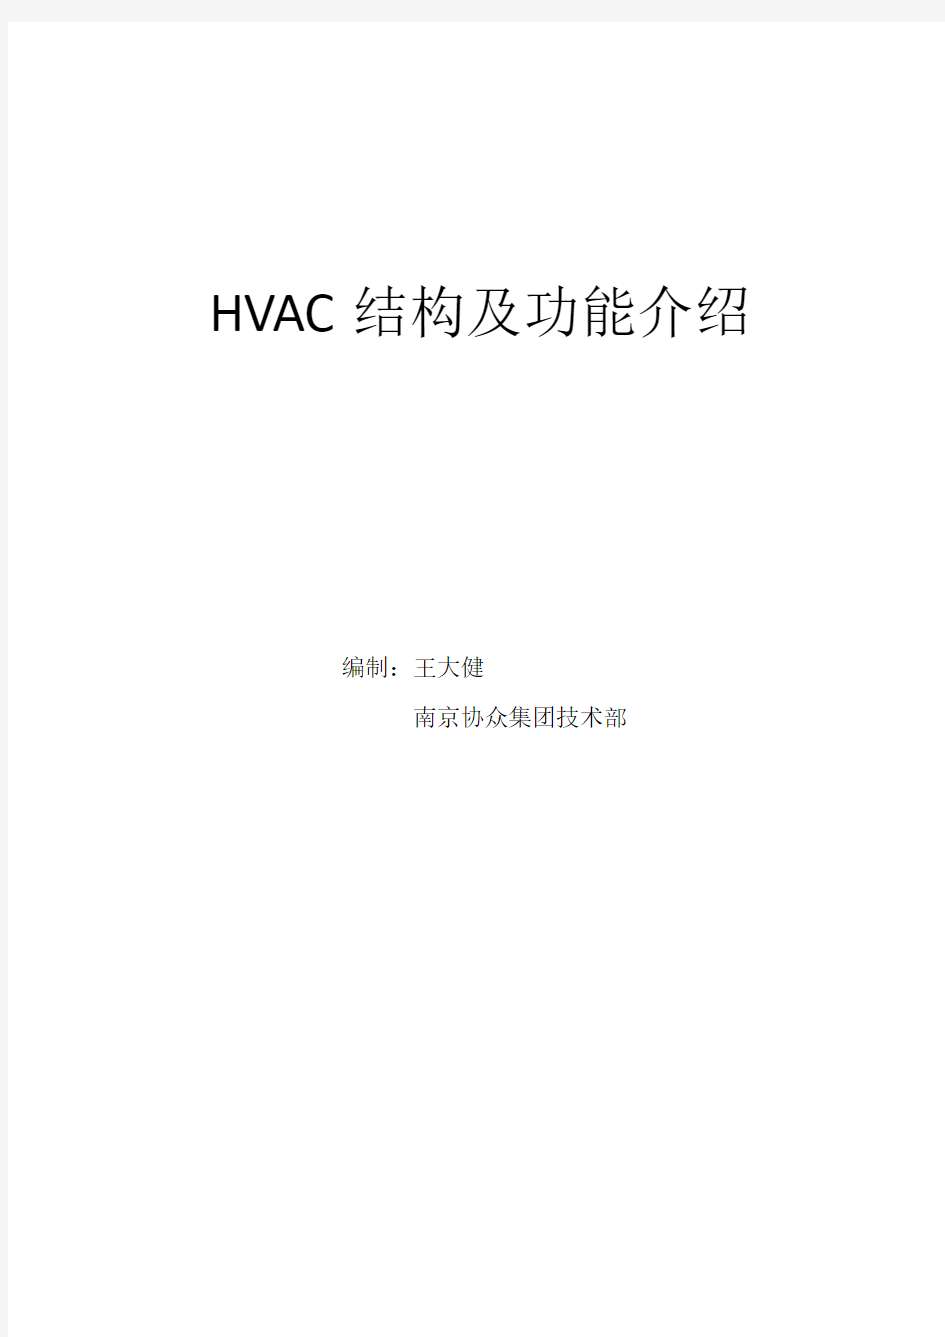 HVAC结构与功能介绍